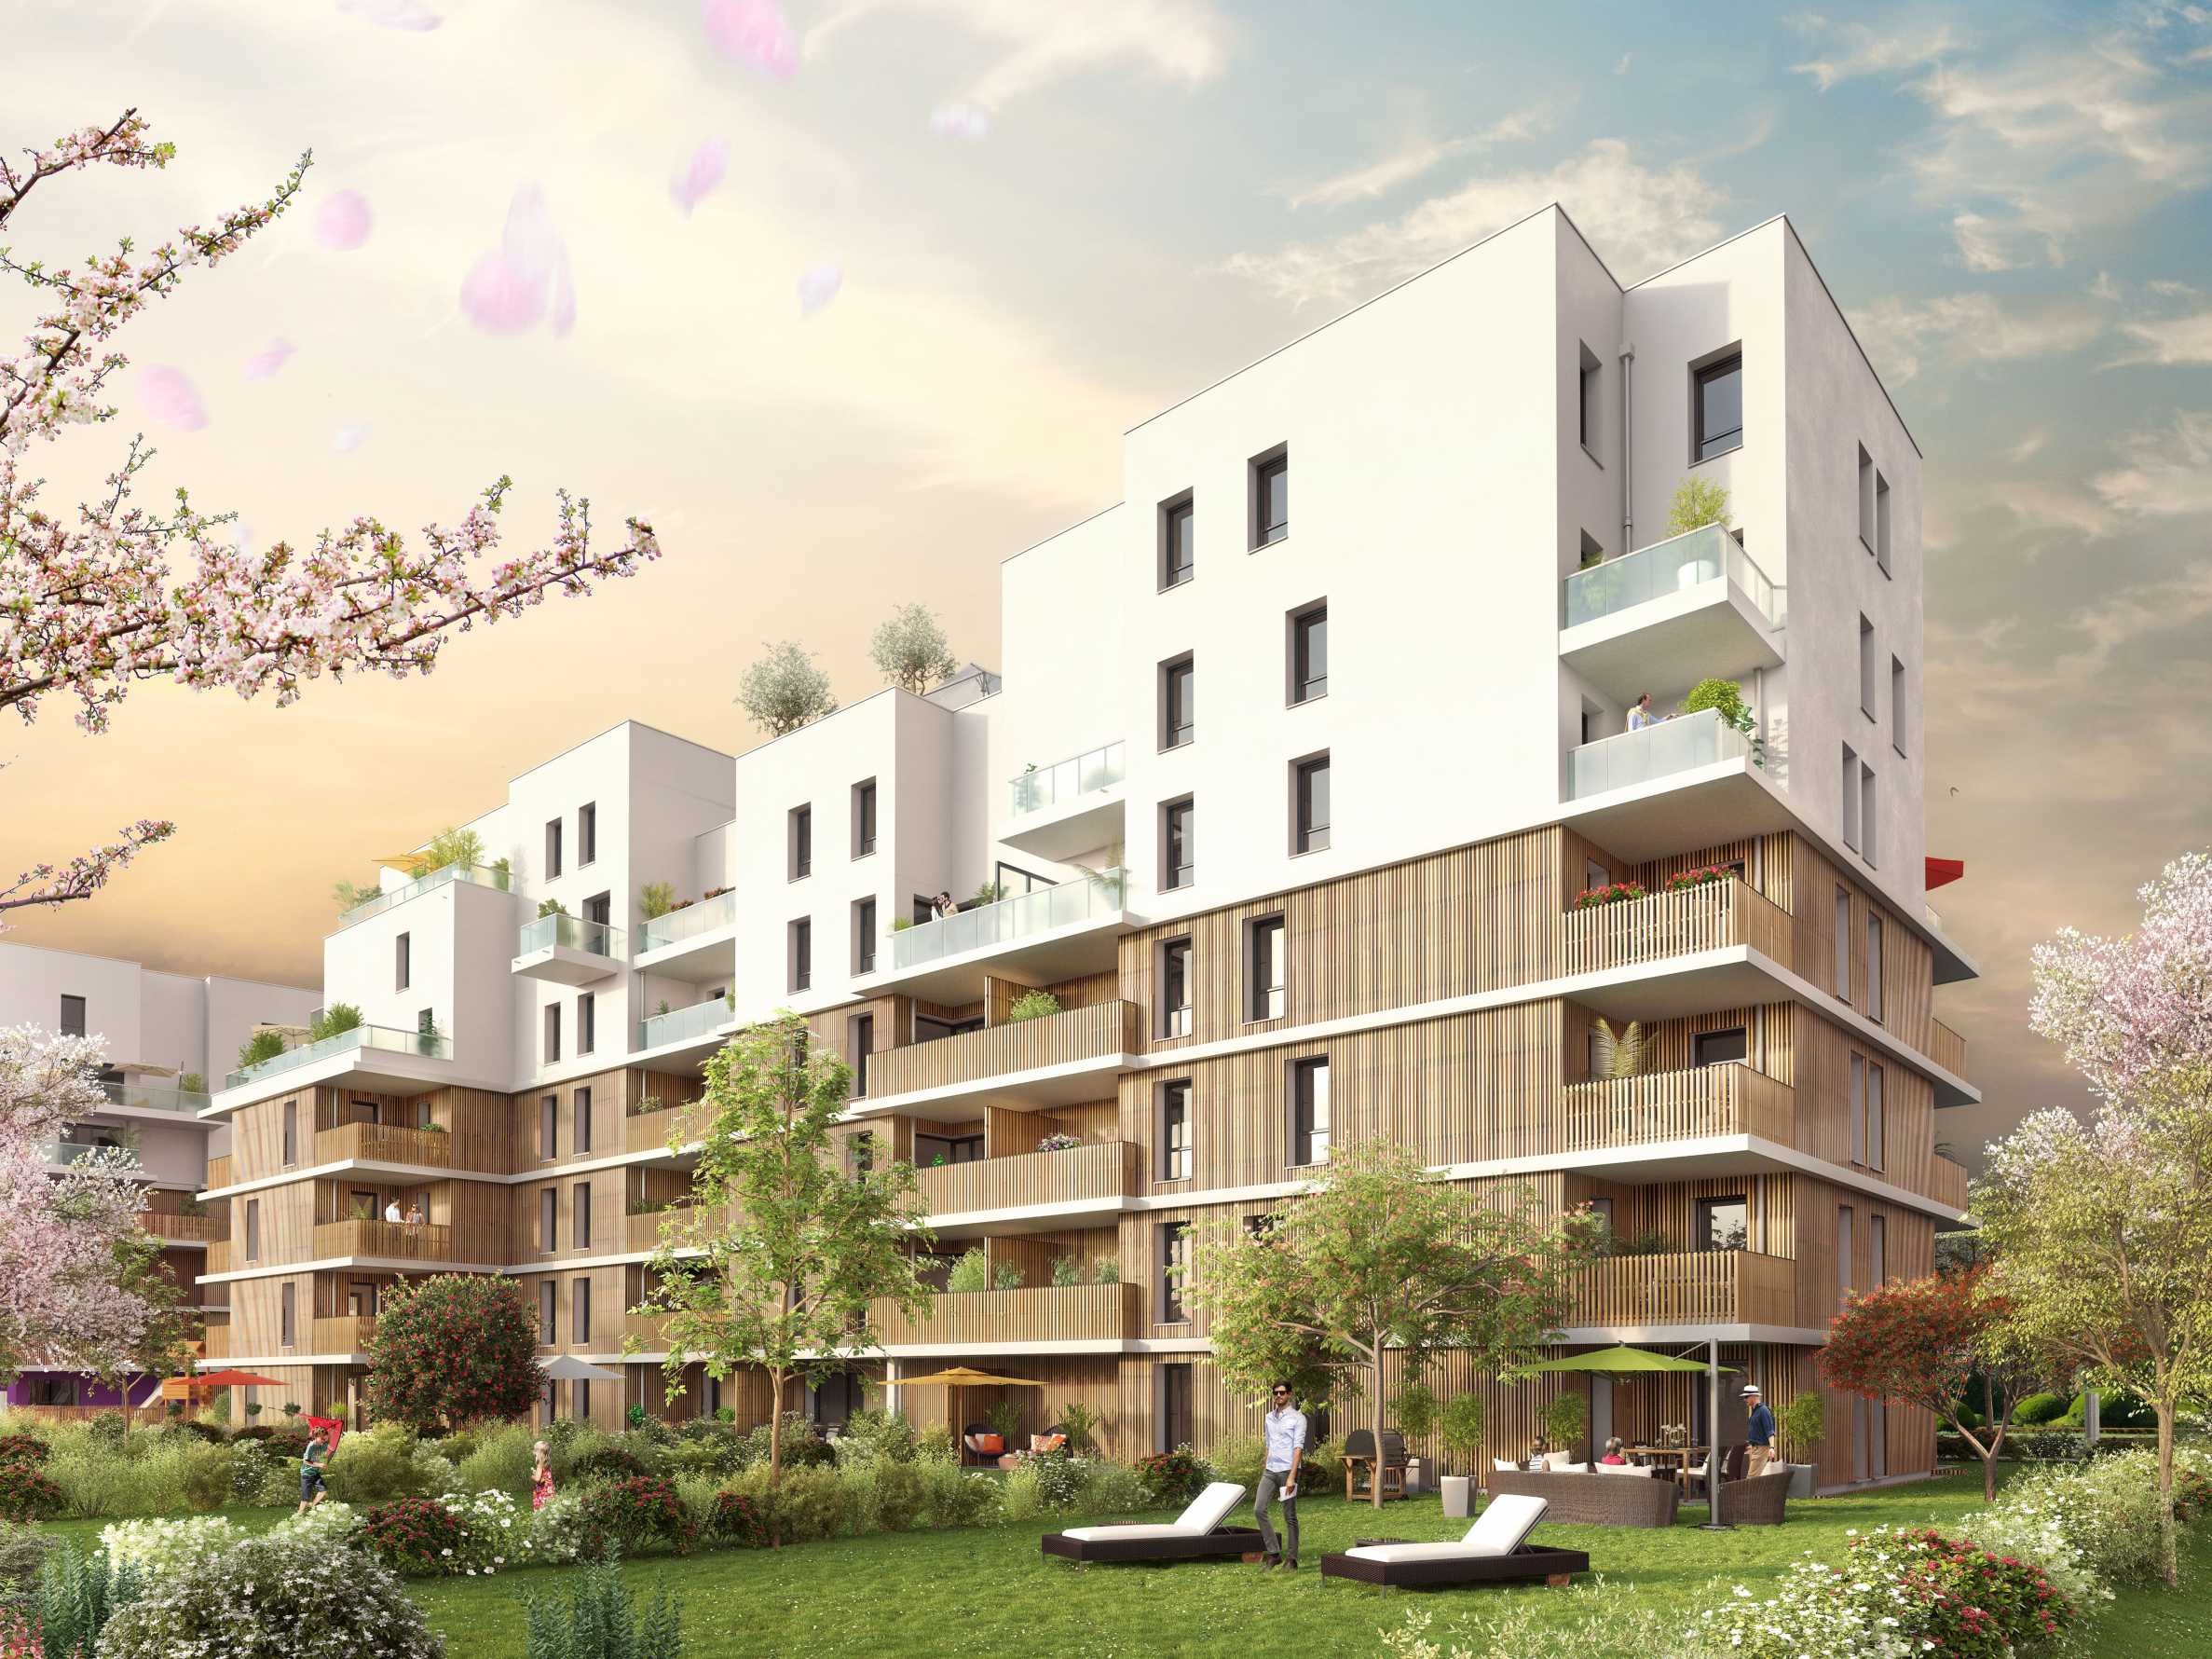 New apartments in the peaceful Ambilly (FR) near Geneva1 - Stonehard